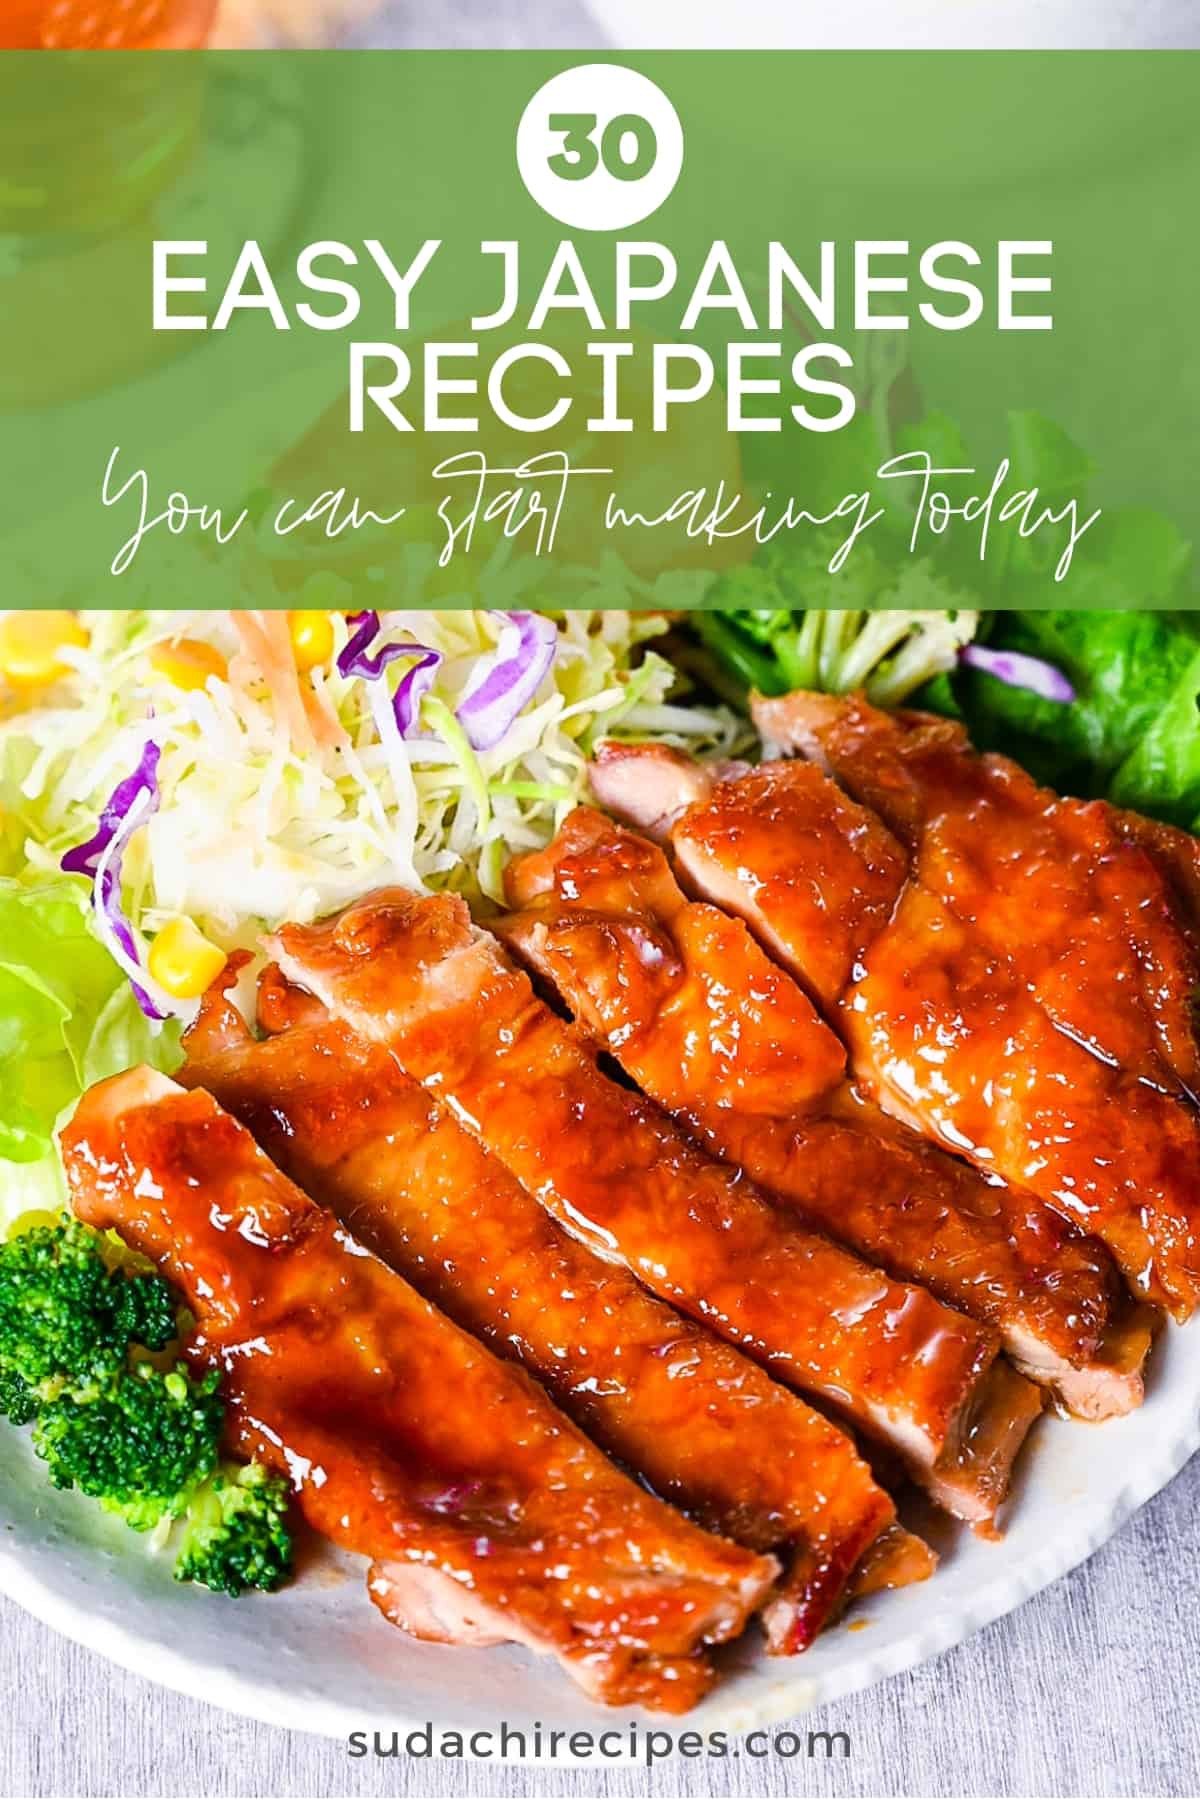 Easy Japanese recipes featuring teriyaki chicken